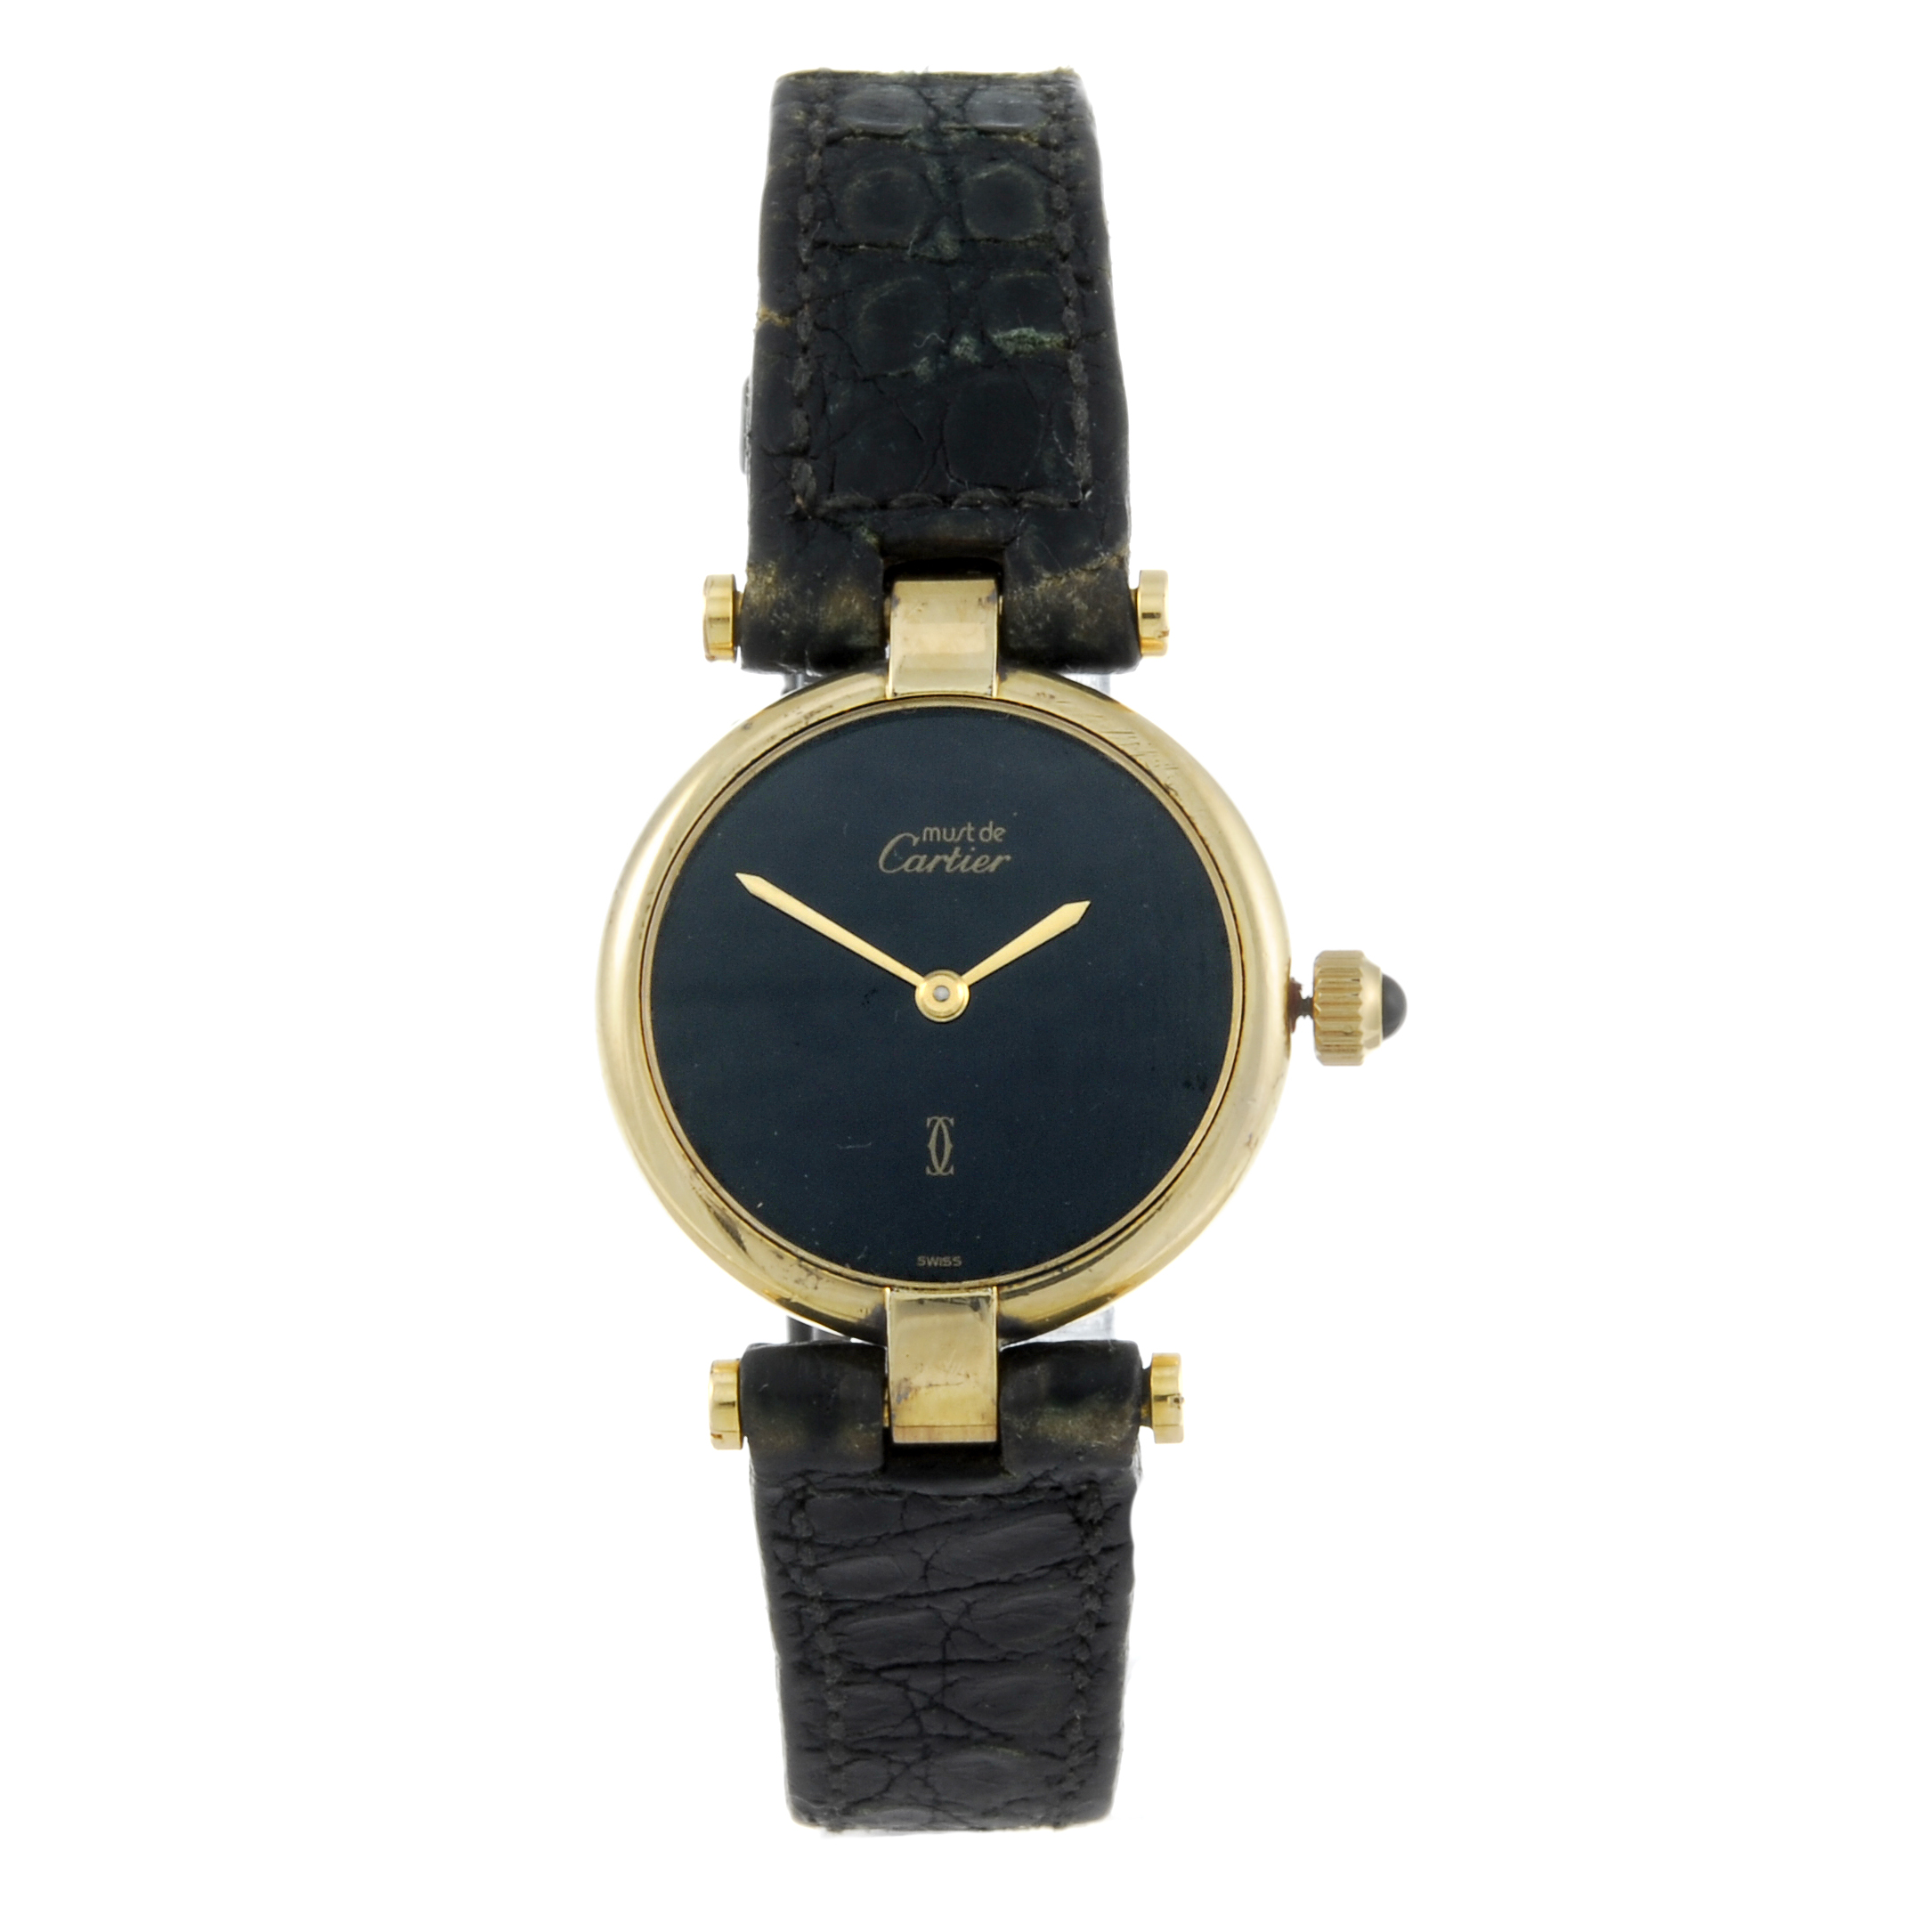 CARTIER - a Must De Cartier wrist watch. Gold plated silver case. Numbered 152315 18. Signed